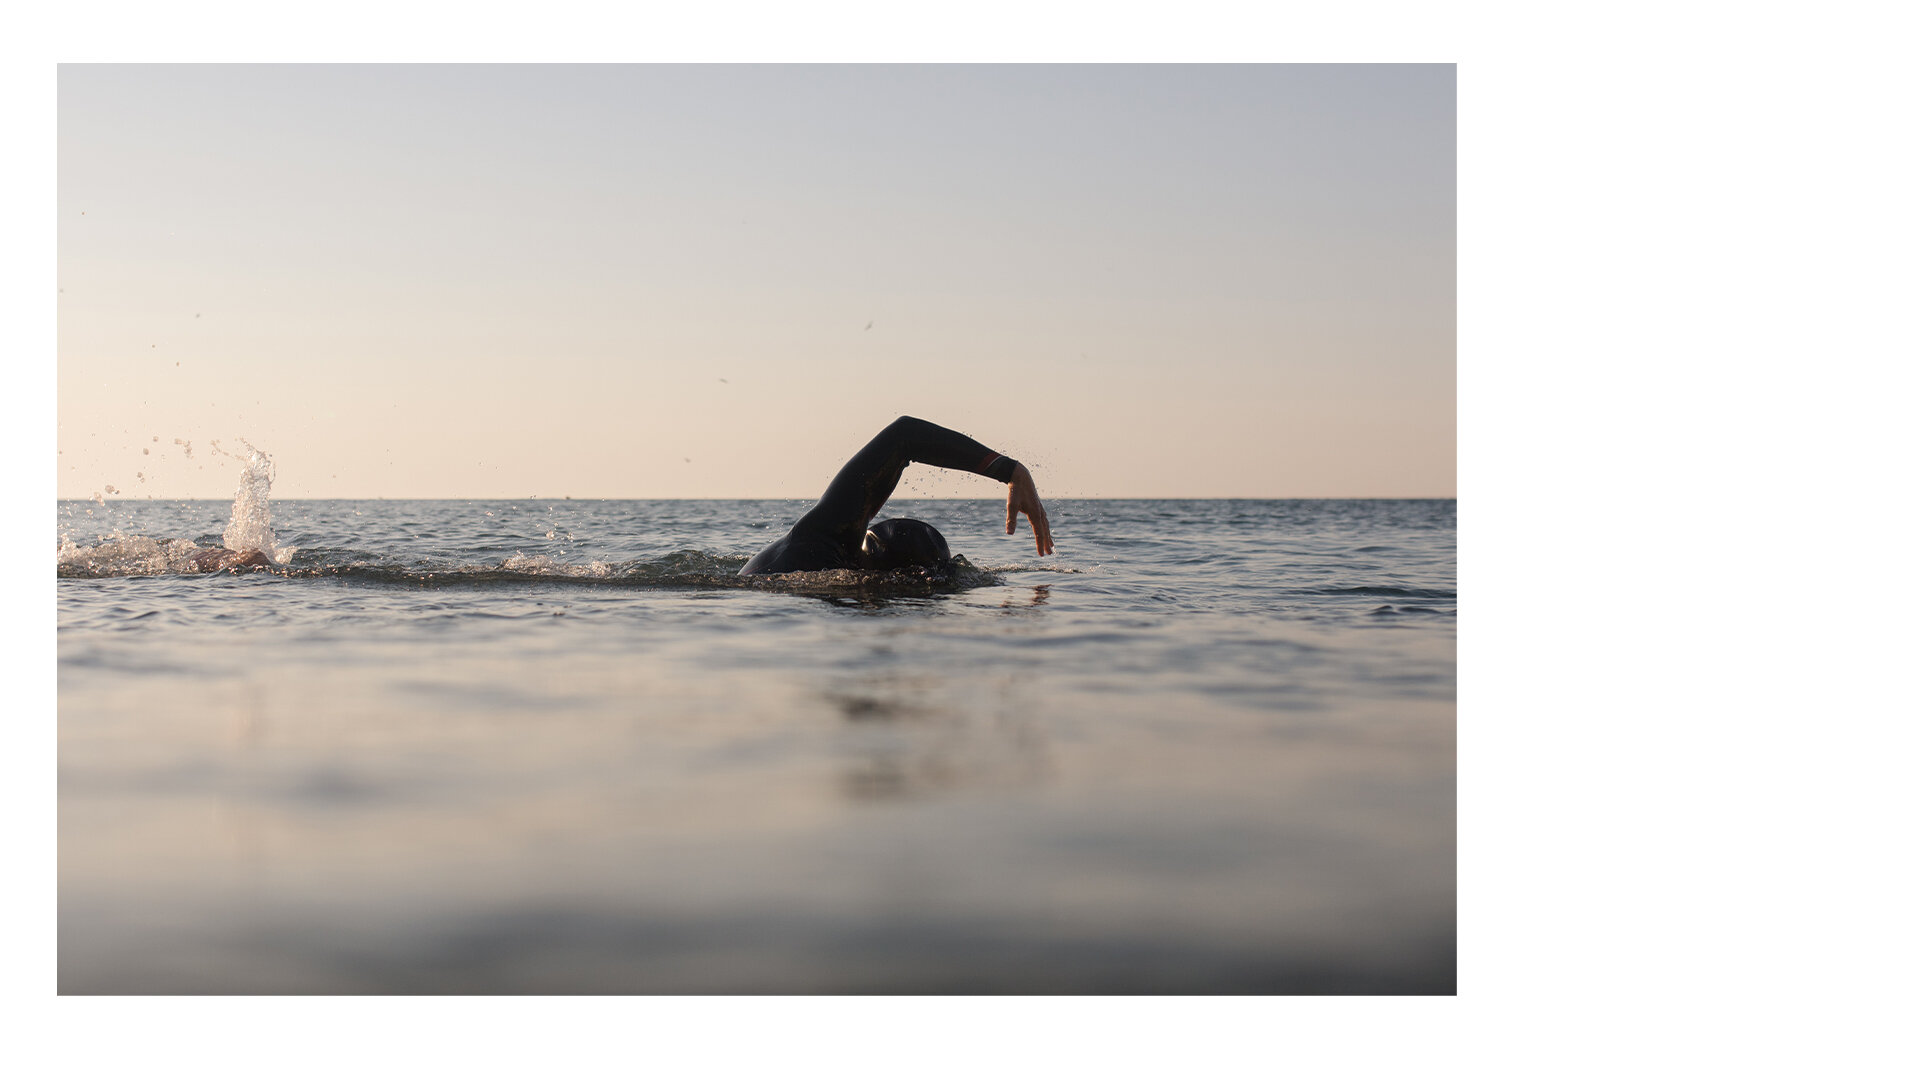 toby-butler-devon-openwaterswimming-seaswim-wildswimming-outdoors-male-tobybutlerphoto-sport-triathlon-swimming-sportphotography-lifestylephotography-open-water-swim-speedo-goggles-22.jpg